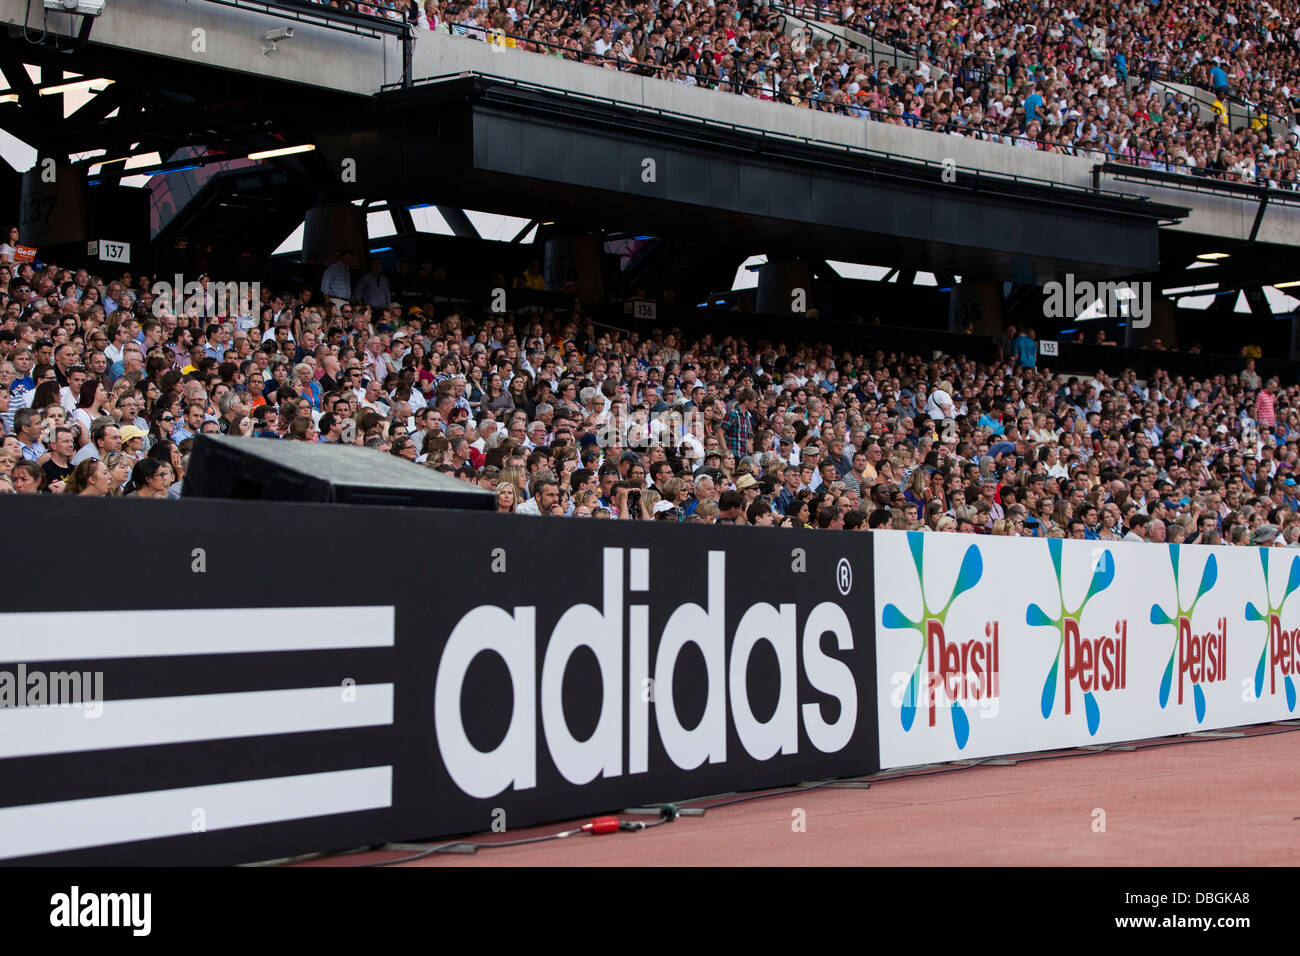 Adidas, Persil, sponsors of the Anniversary Games, Olympic Stadium, Diamond League, Stock Photo